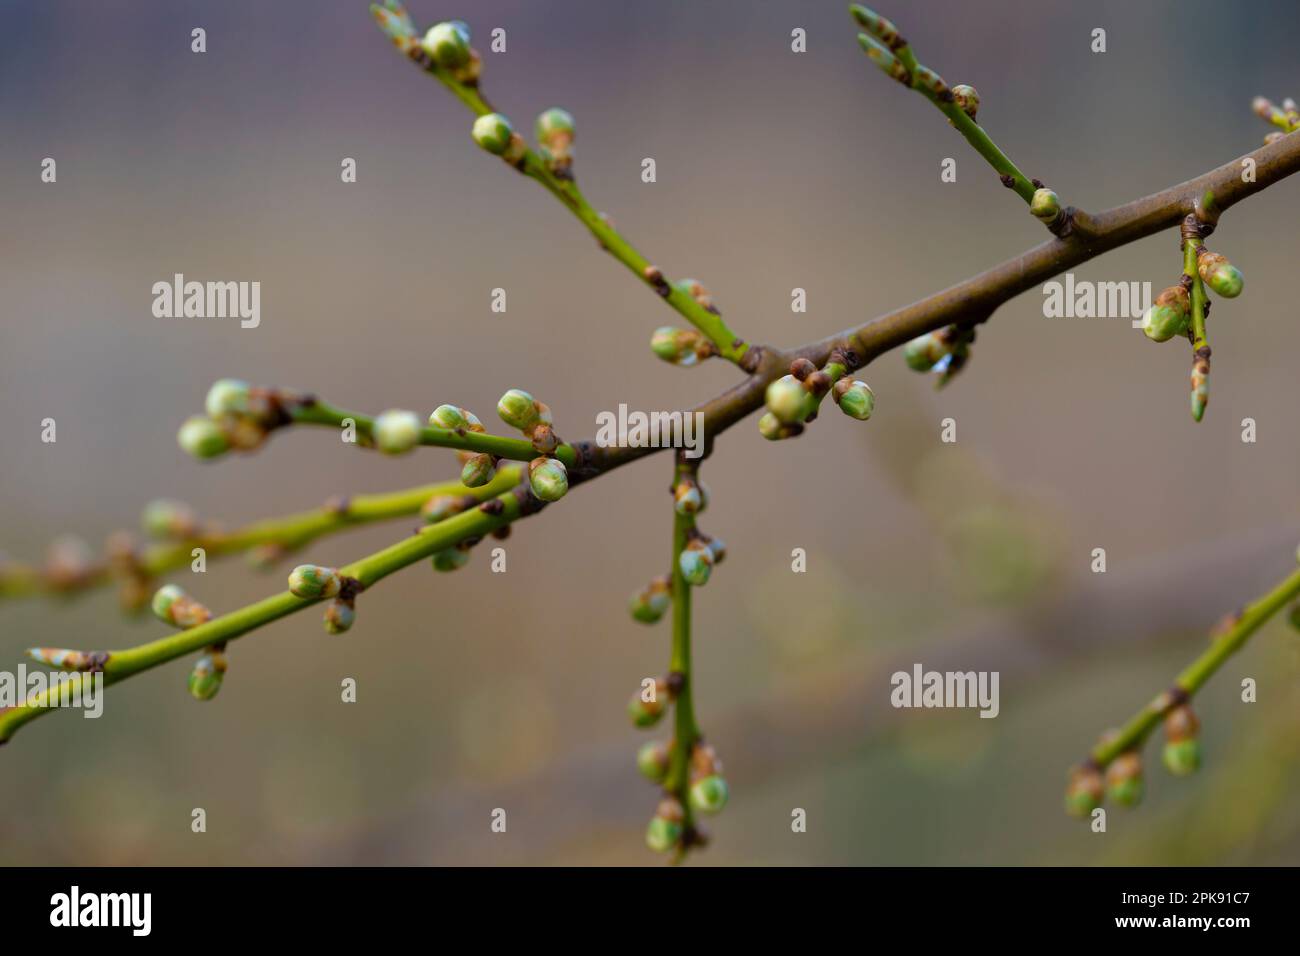 Junger Baum im Frühling mit ersten Blütenknospen, selektive Schärfe, geringe Feldtiefe, Frühlingsbeginn Stockfoto